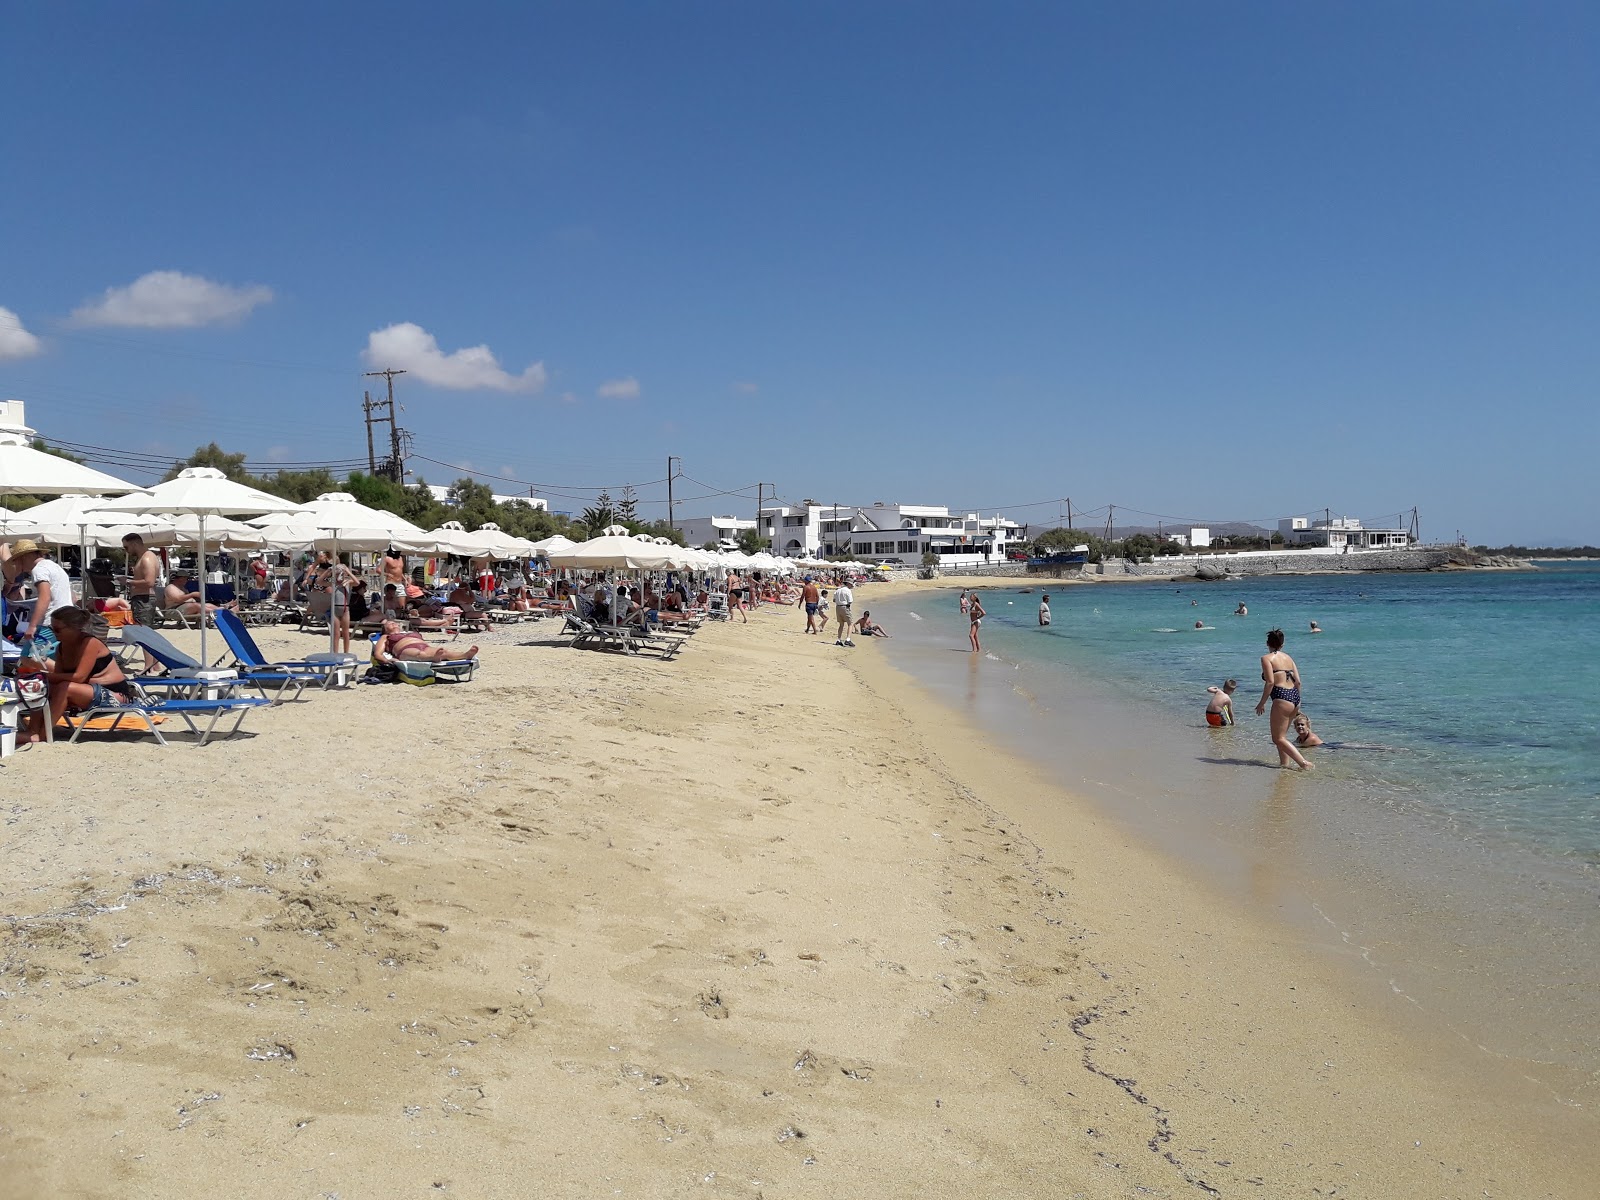 Fotografija Plaža Agios Georgios z svetel fin pesek površino